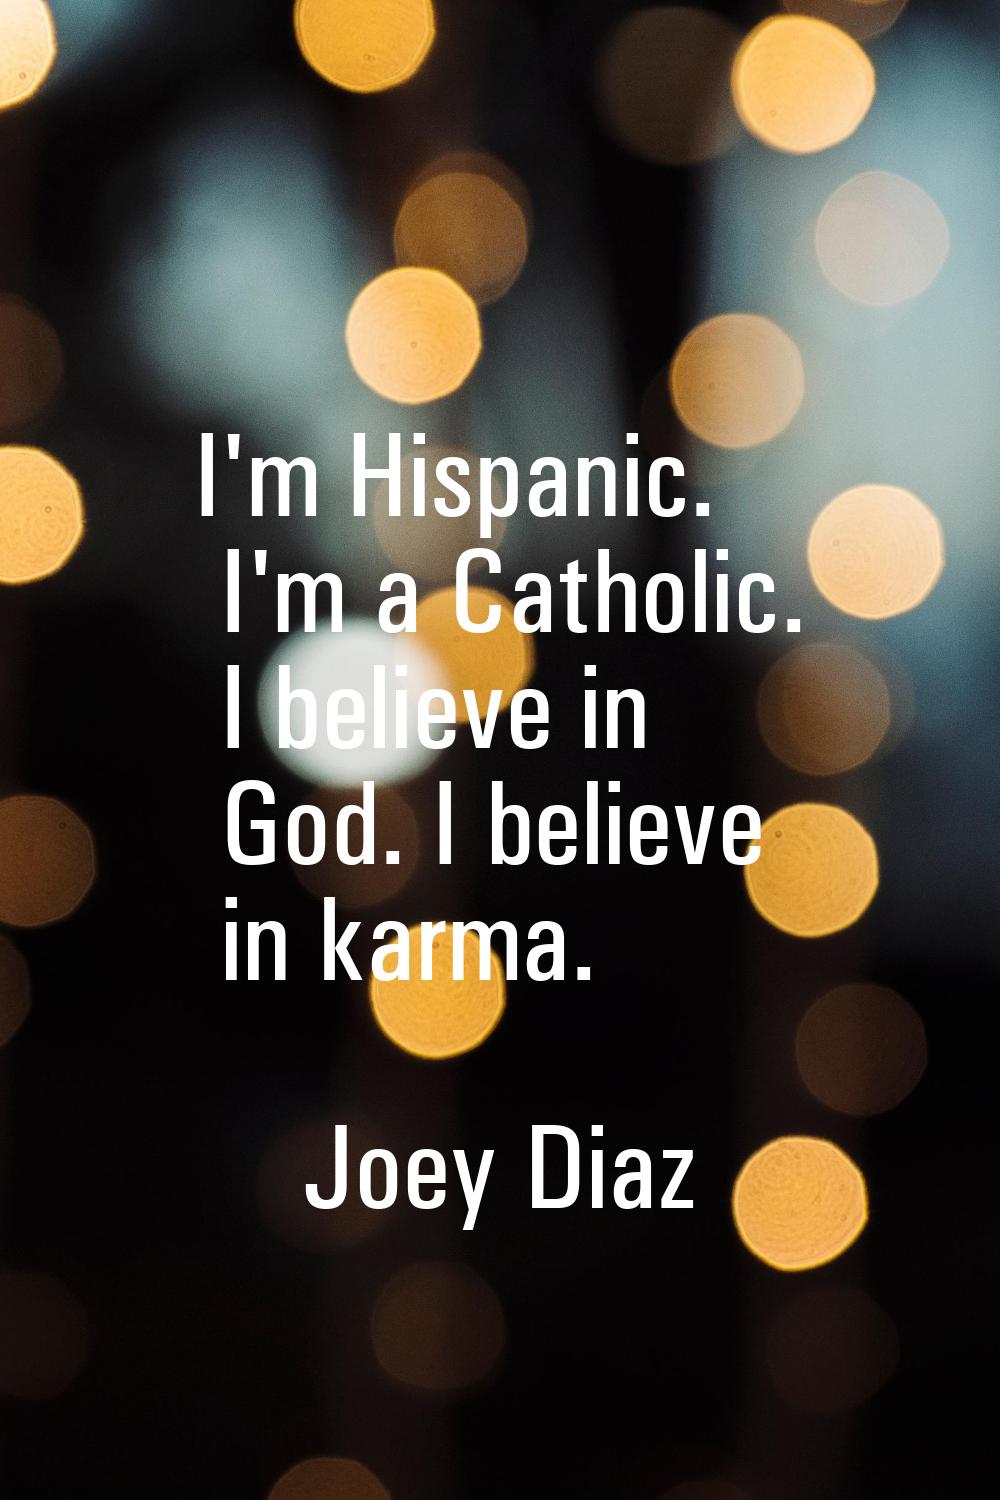 I'm Hispanic. I'm a Catholic. I believe in God. I believe in karma.